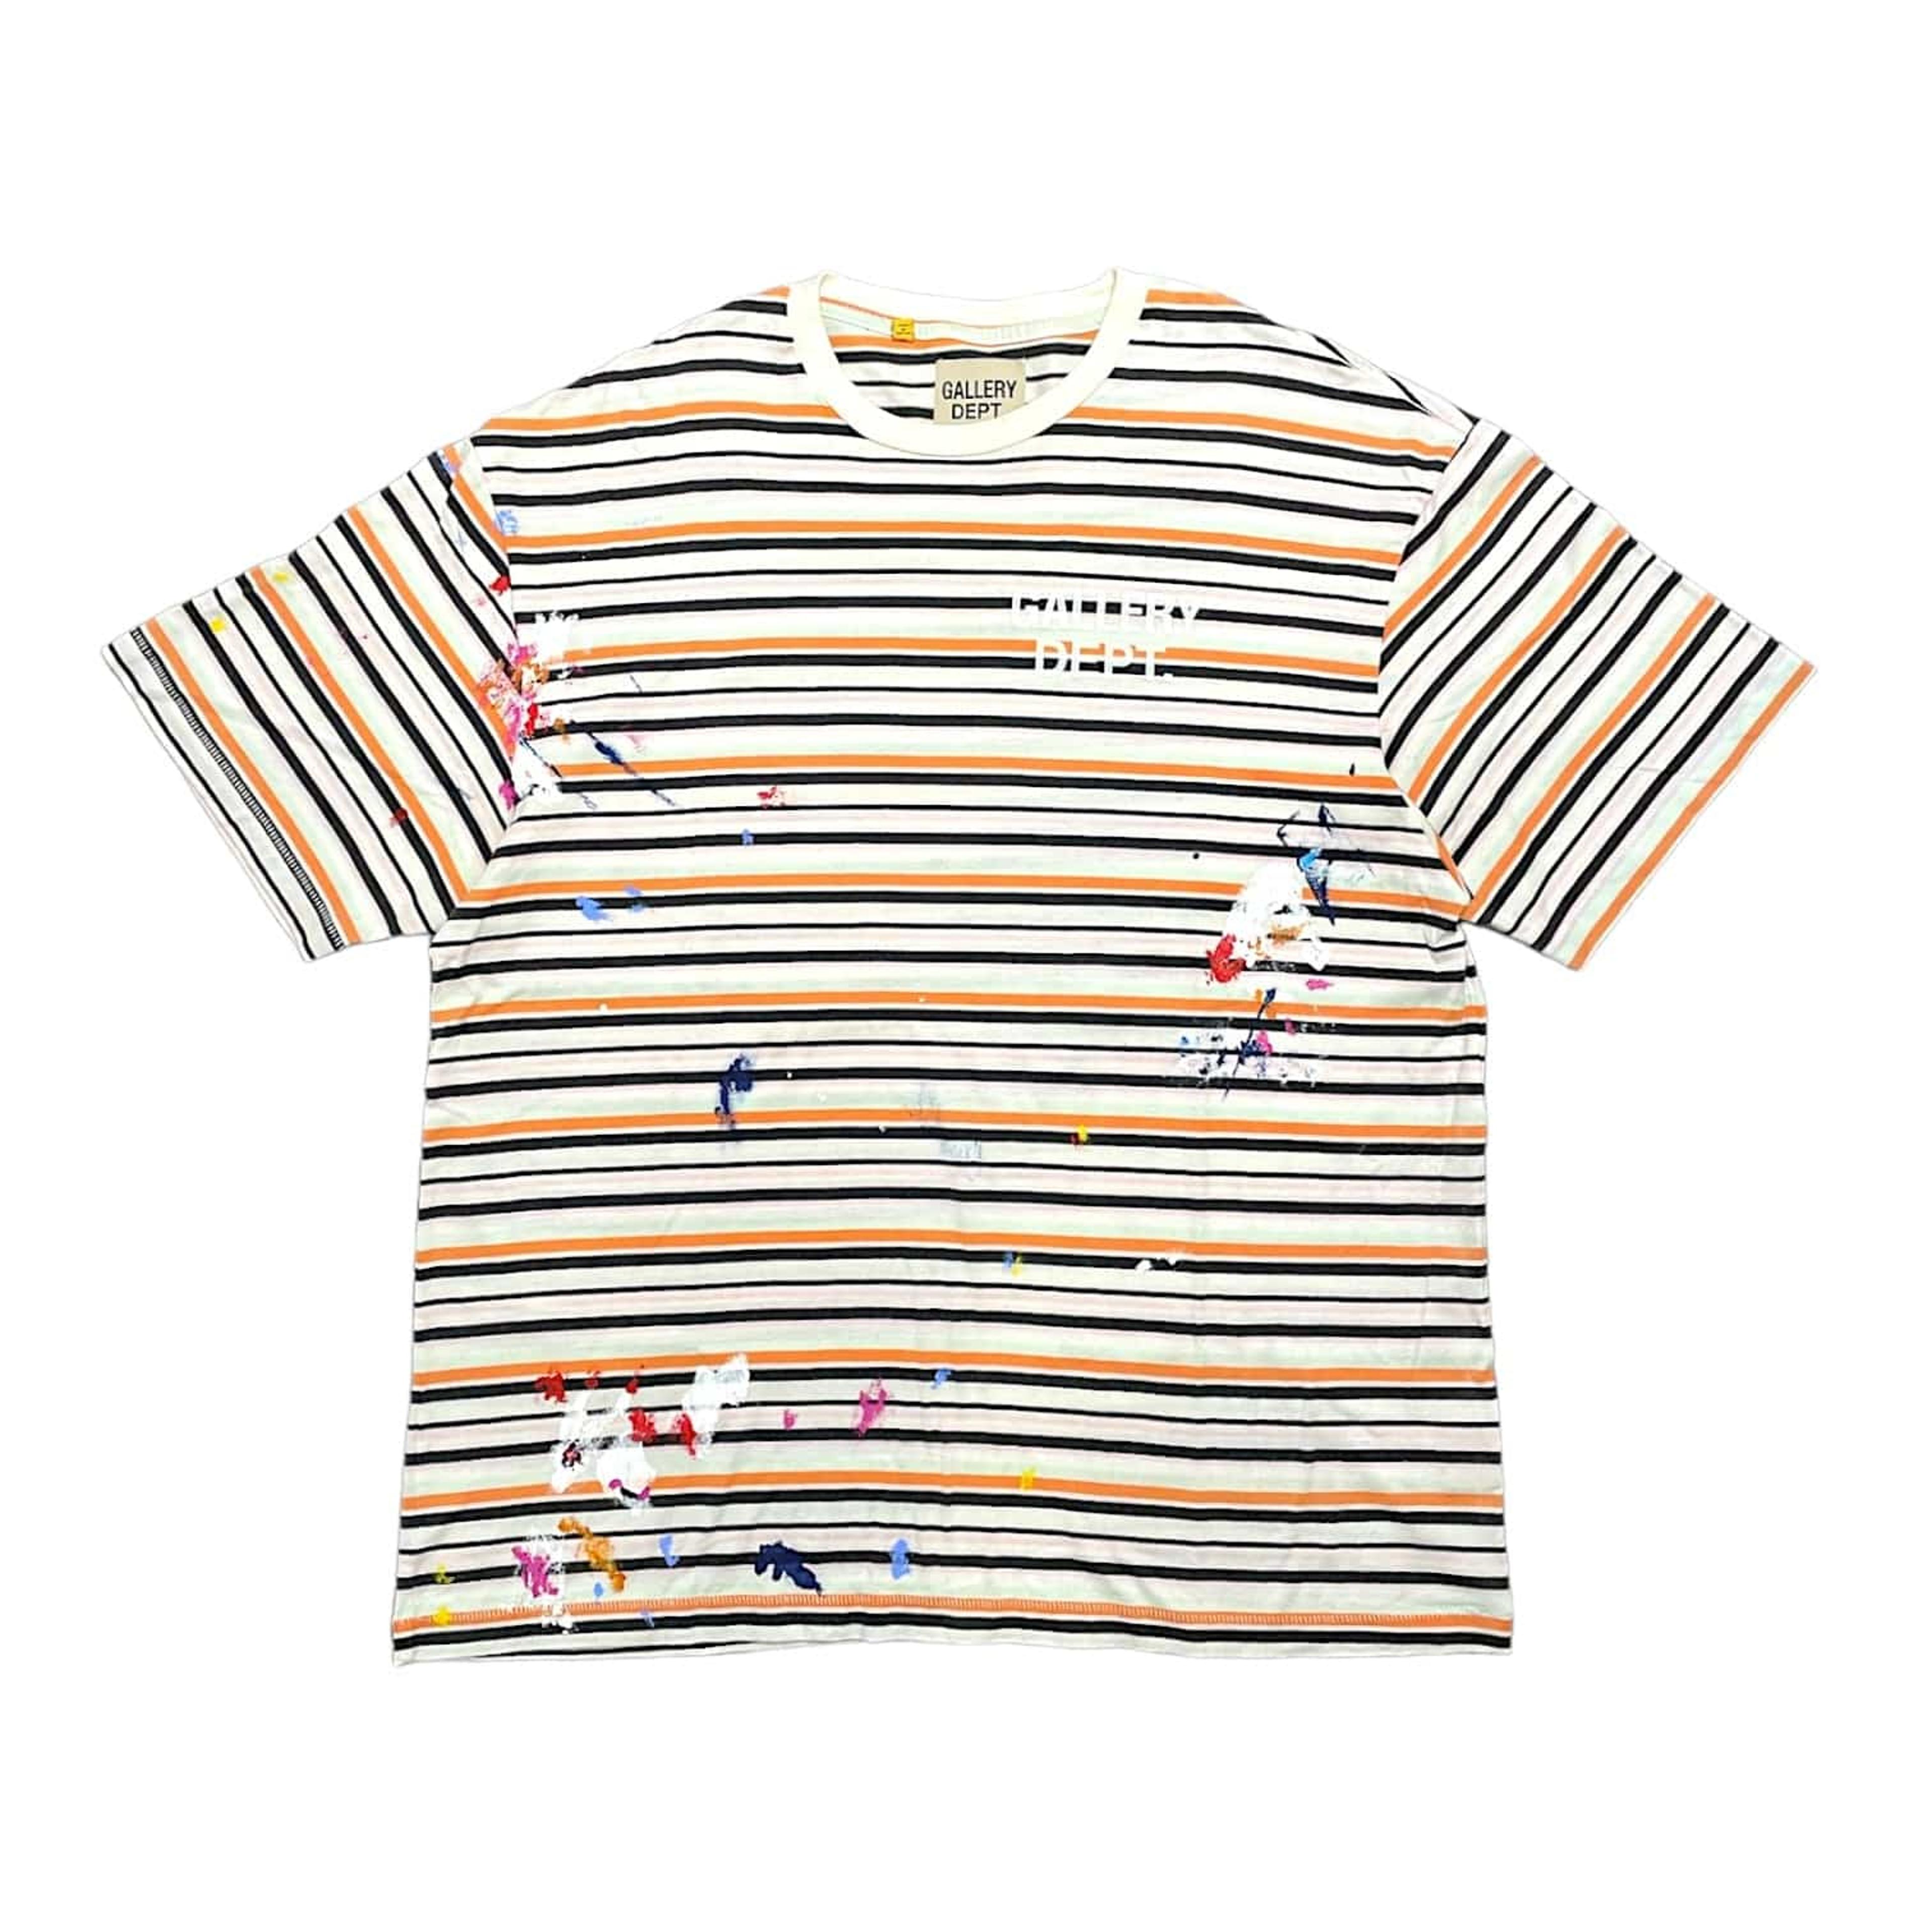 Gallery Department Nelson Striped Short Sleeve Tee Shirt Multi